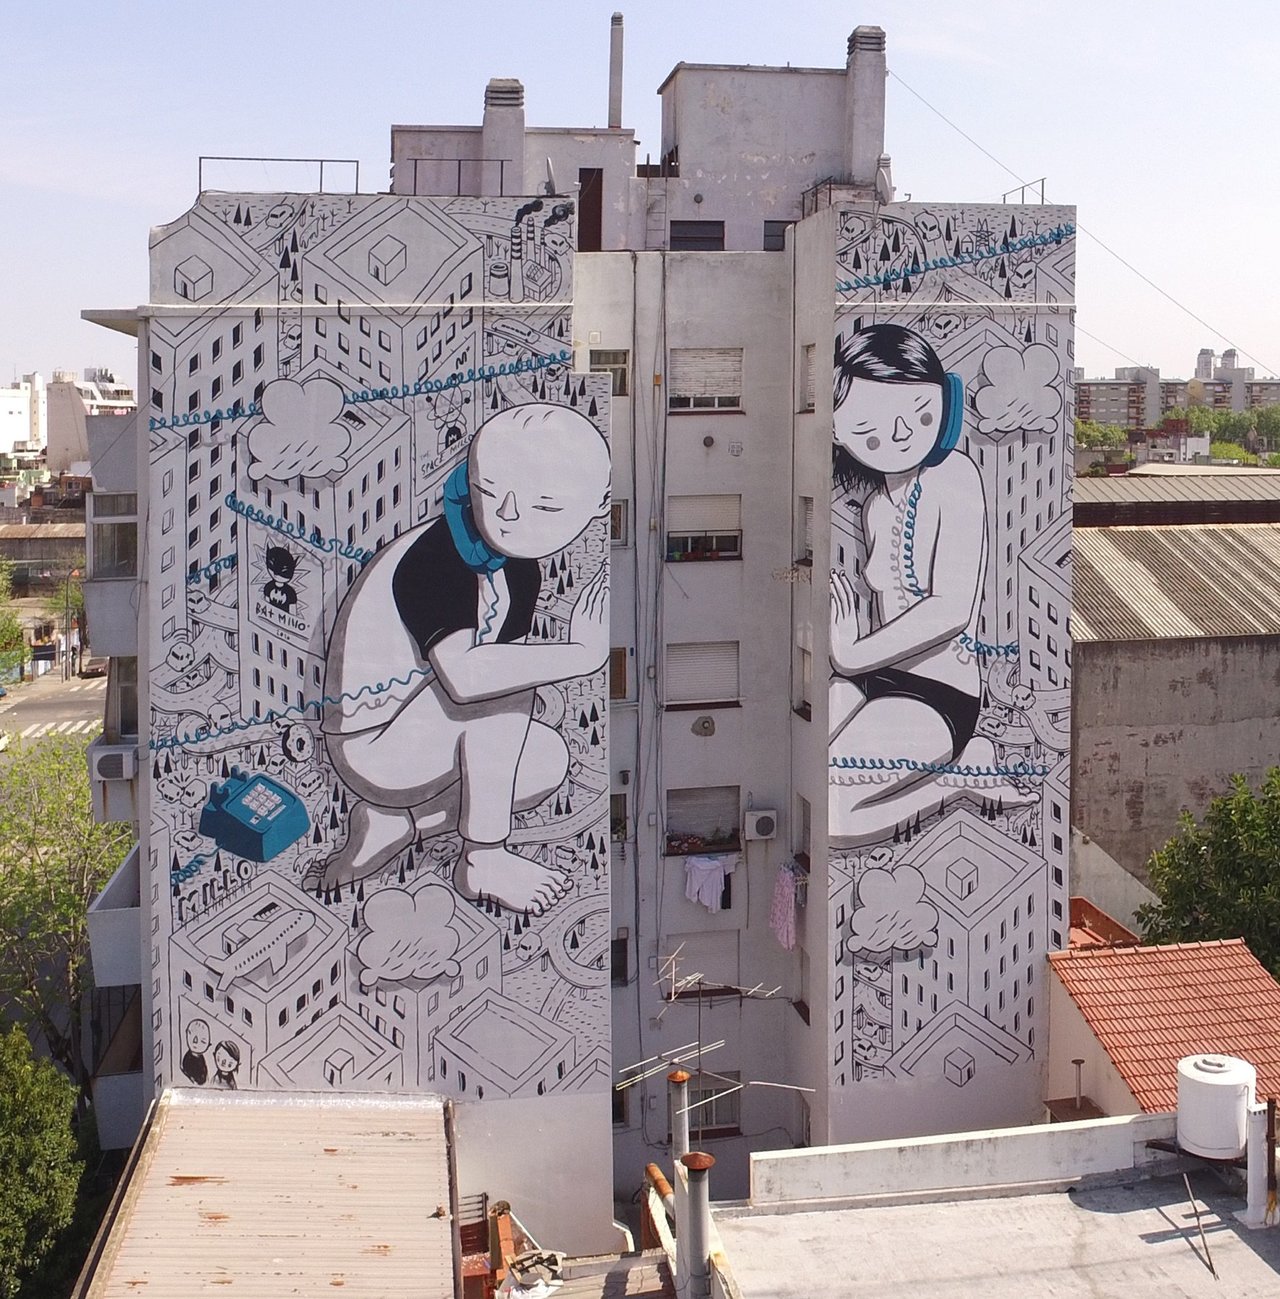 ”How Did We Get So Far Apart” by Millo in Buenos Aires #streetart https://streetartnews.net/2016/10/how-did-we-get-so-far-apart-by-millo-in-buenos-aires.html https://t.co/4OJfAossdn